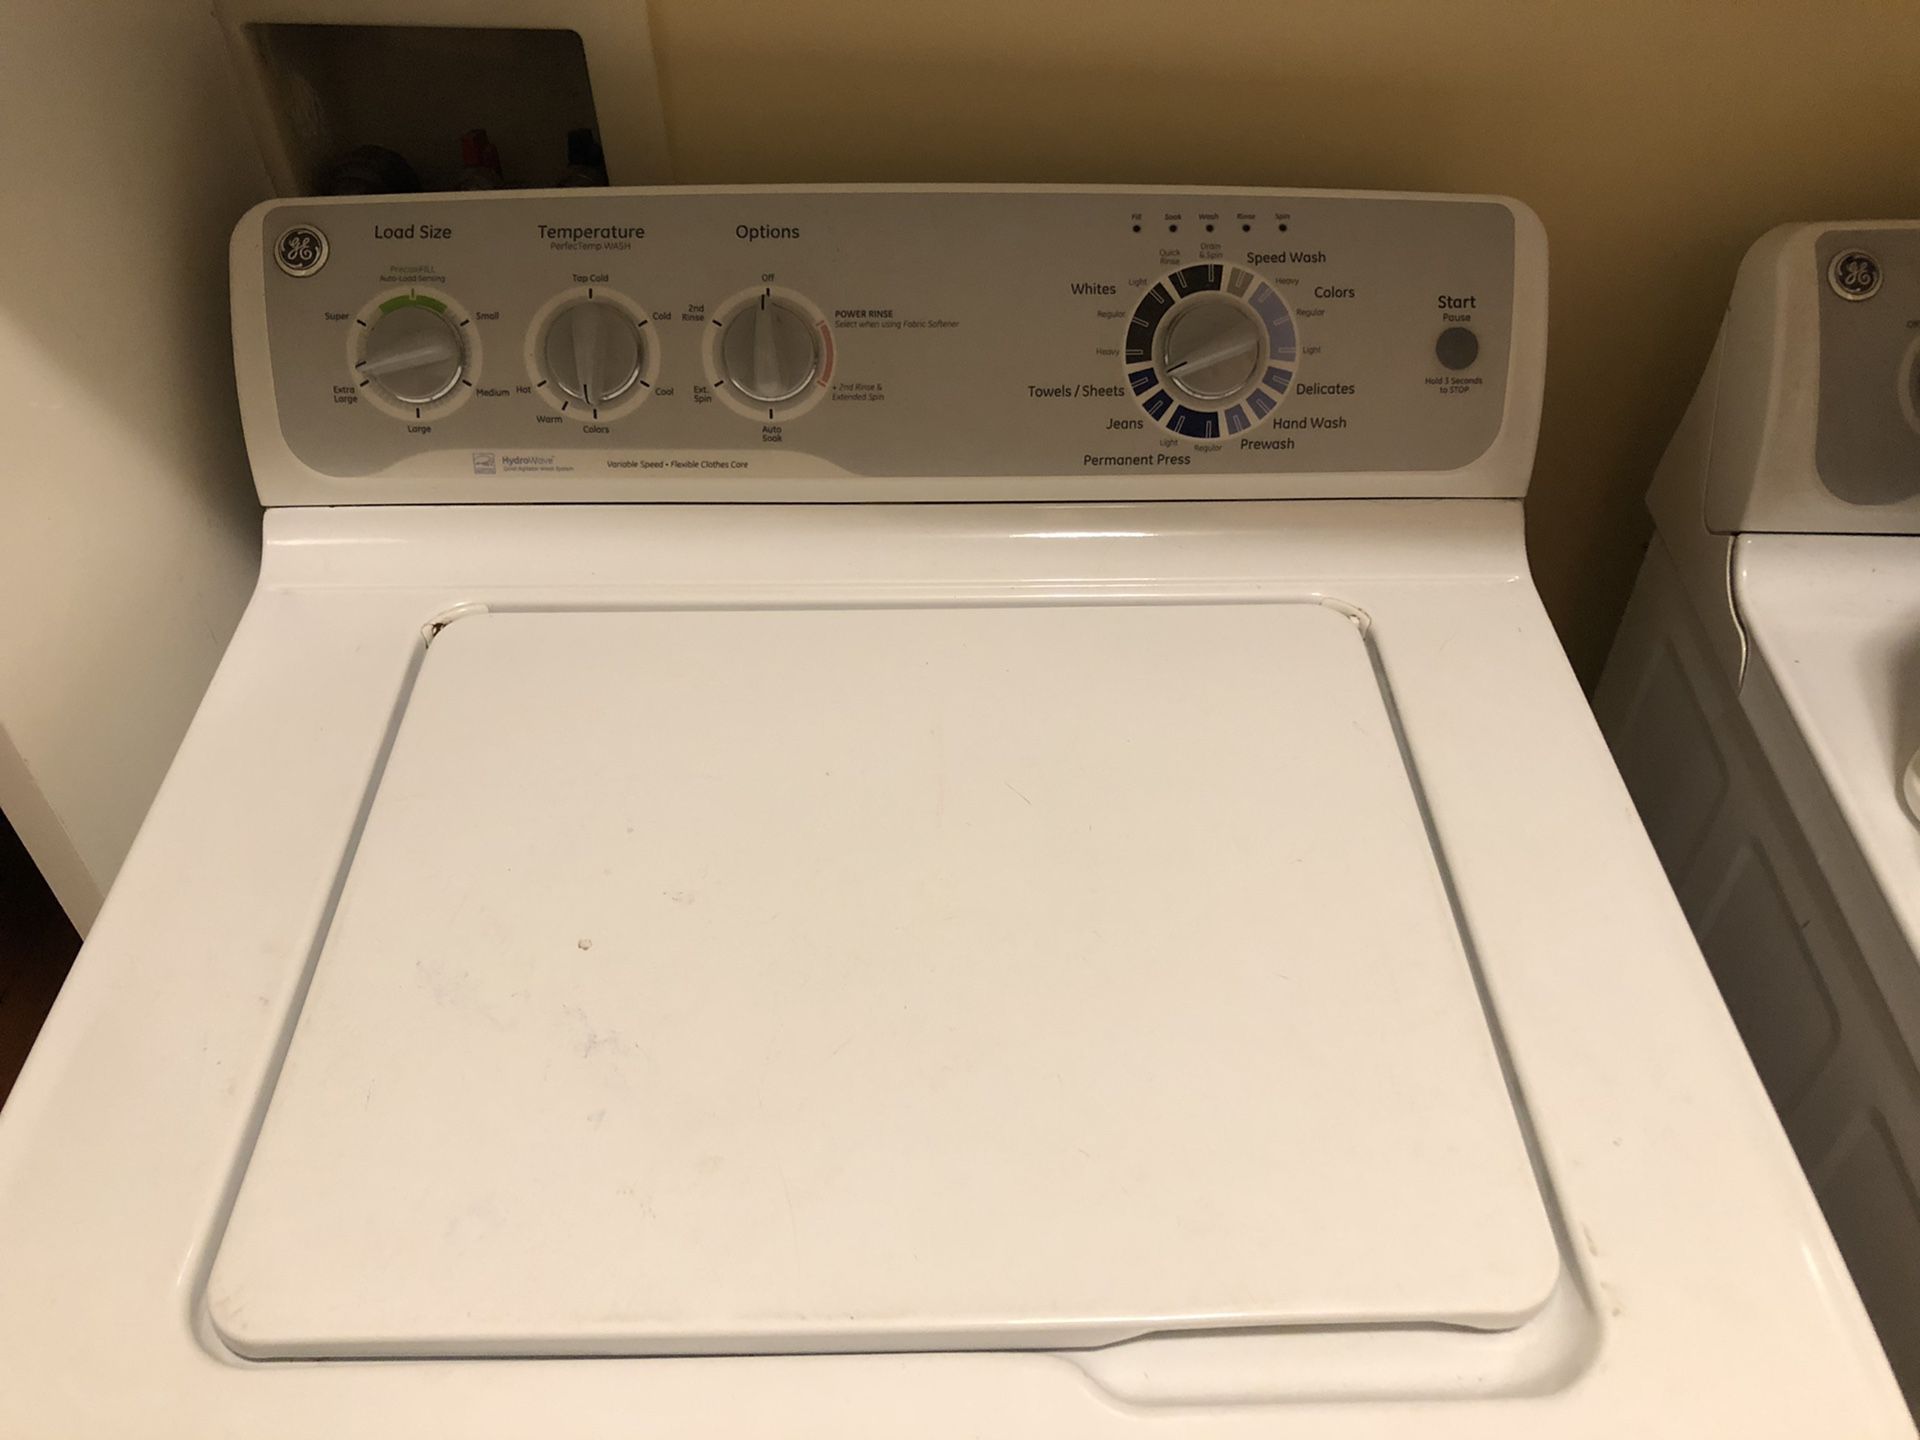 GE working washing machine